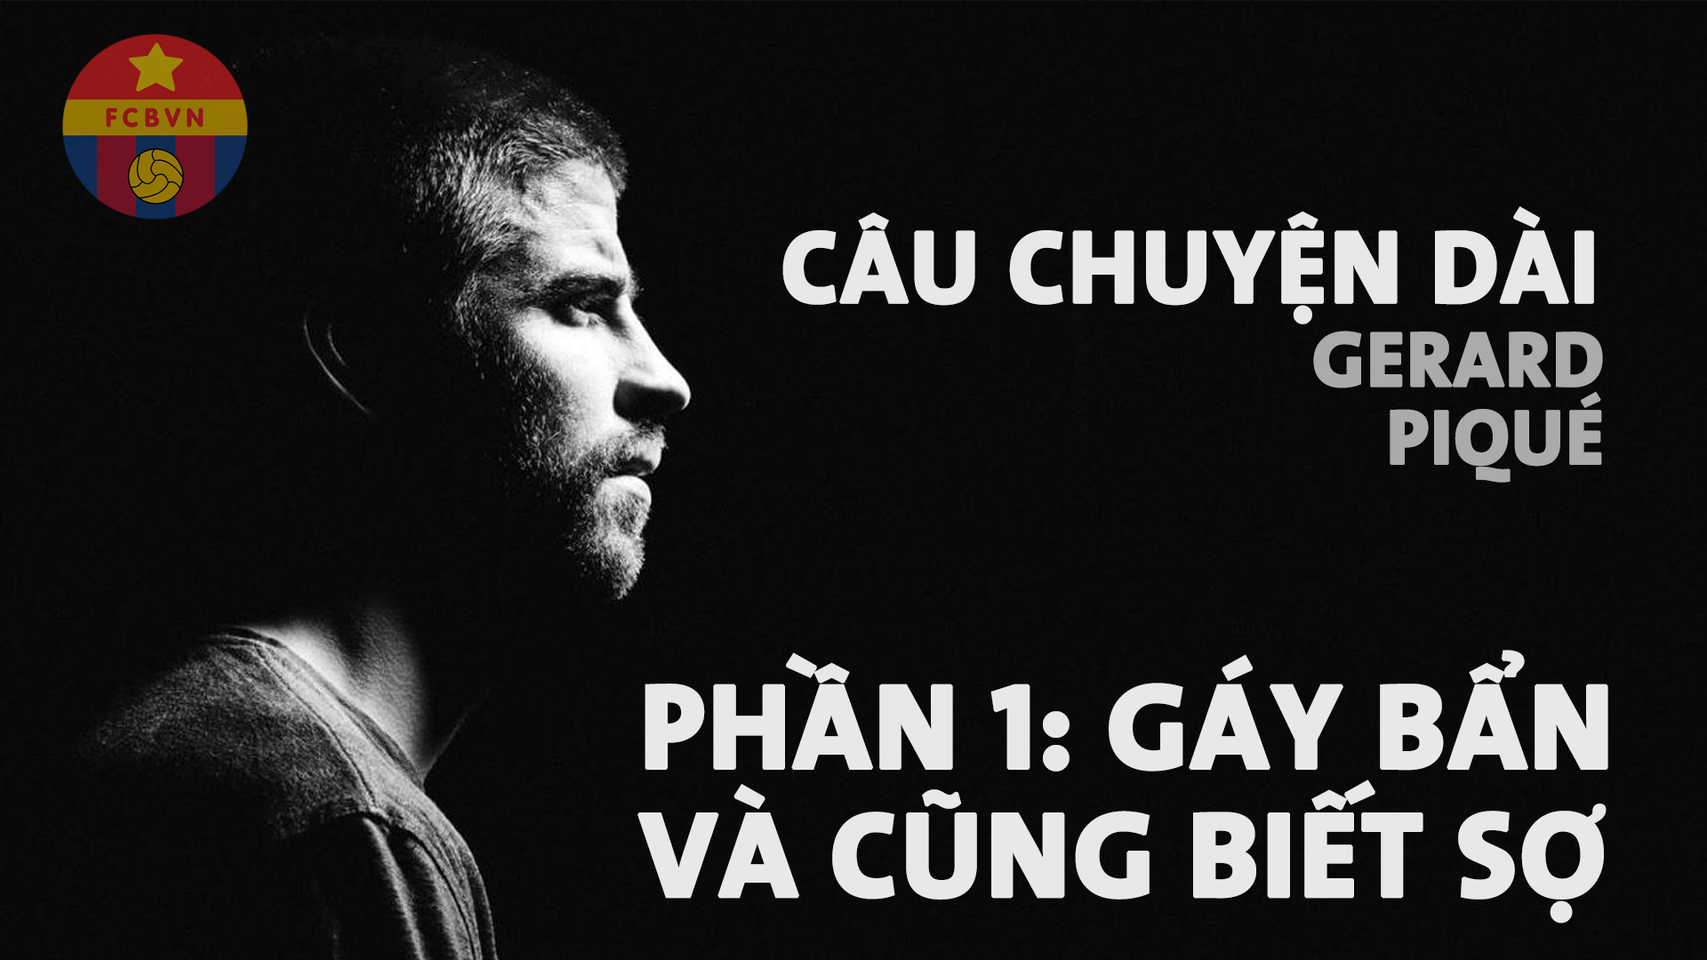 Gerard_Pique-P1-Gay-ban.png